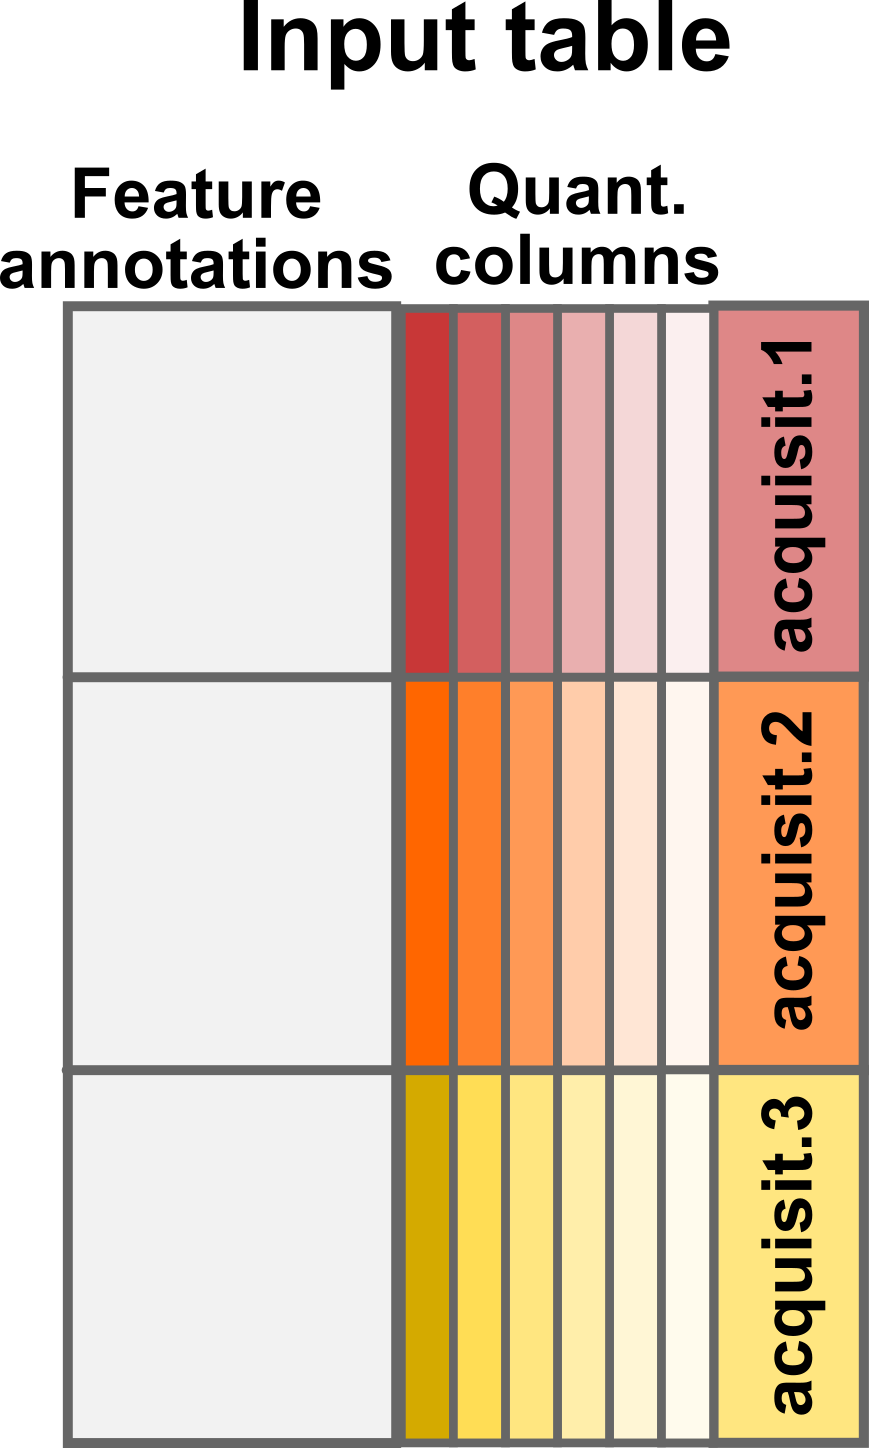 Conceptual representation of the `assayData` input table